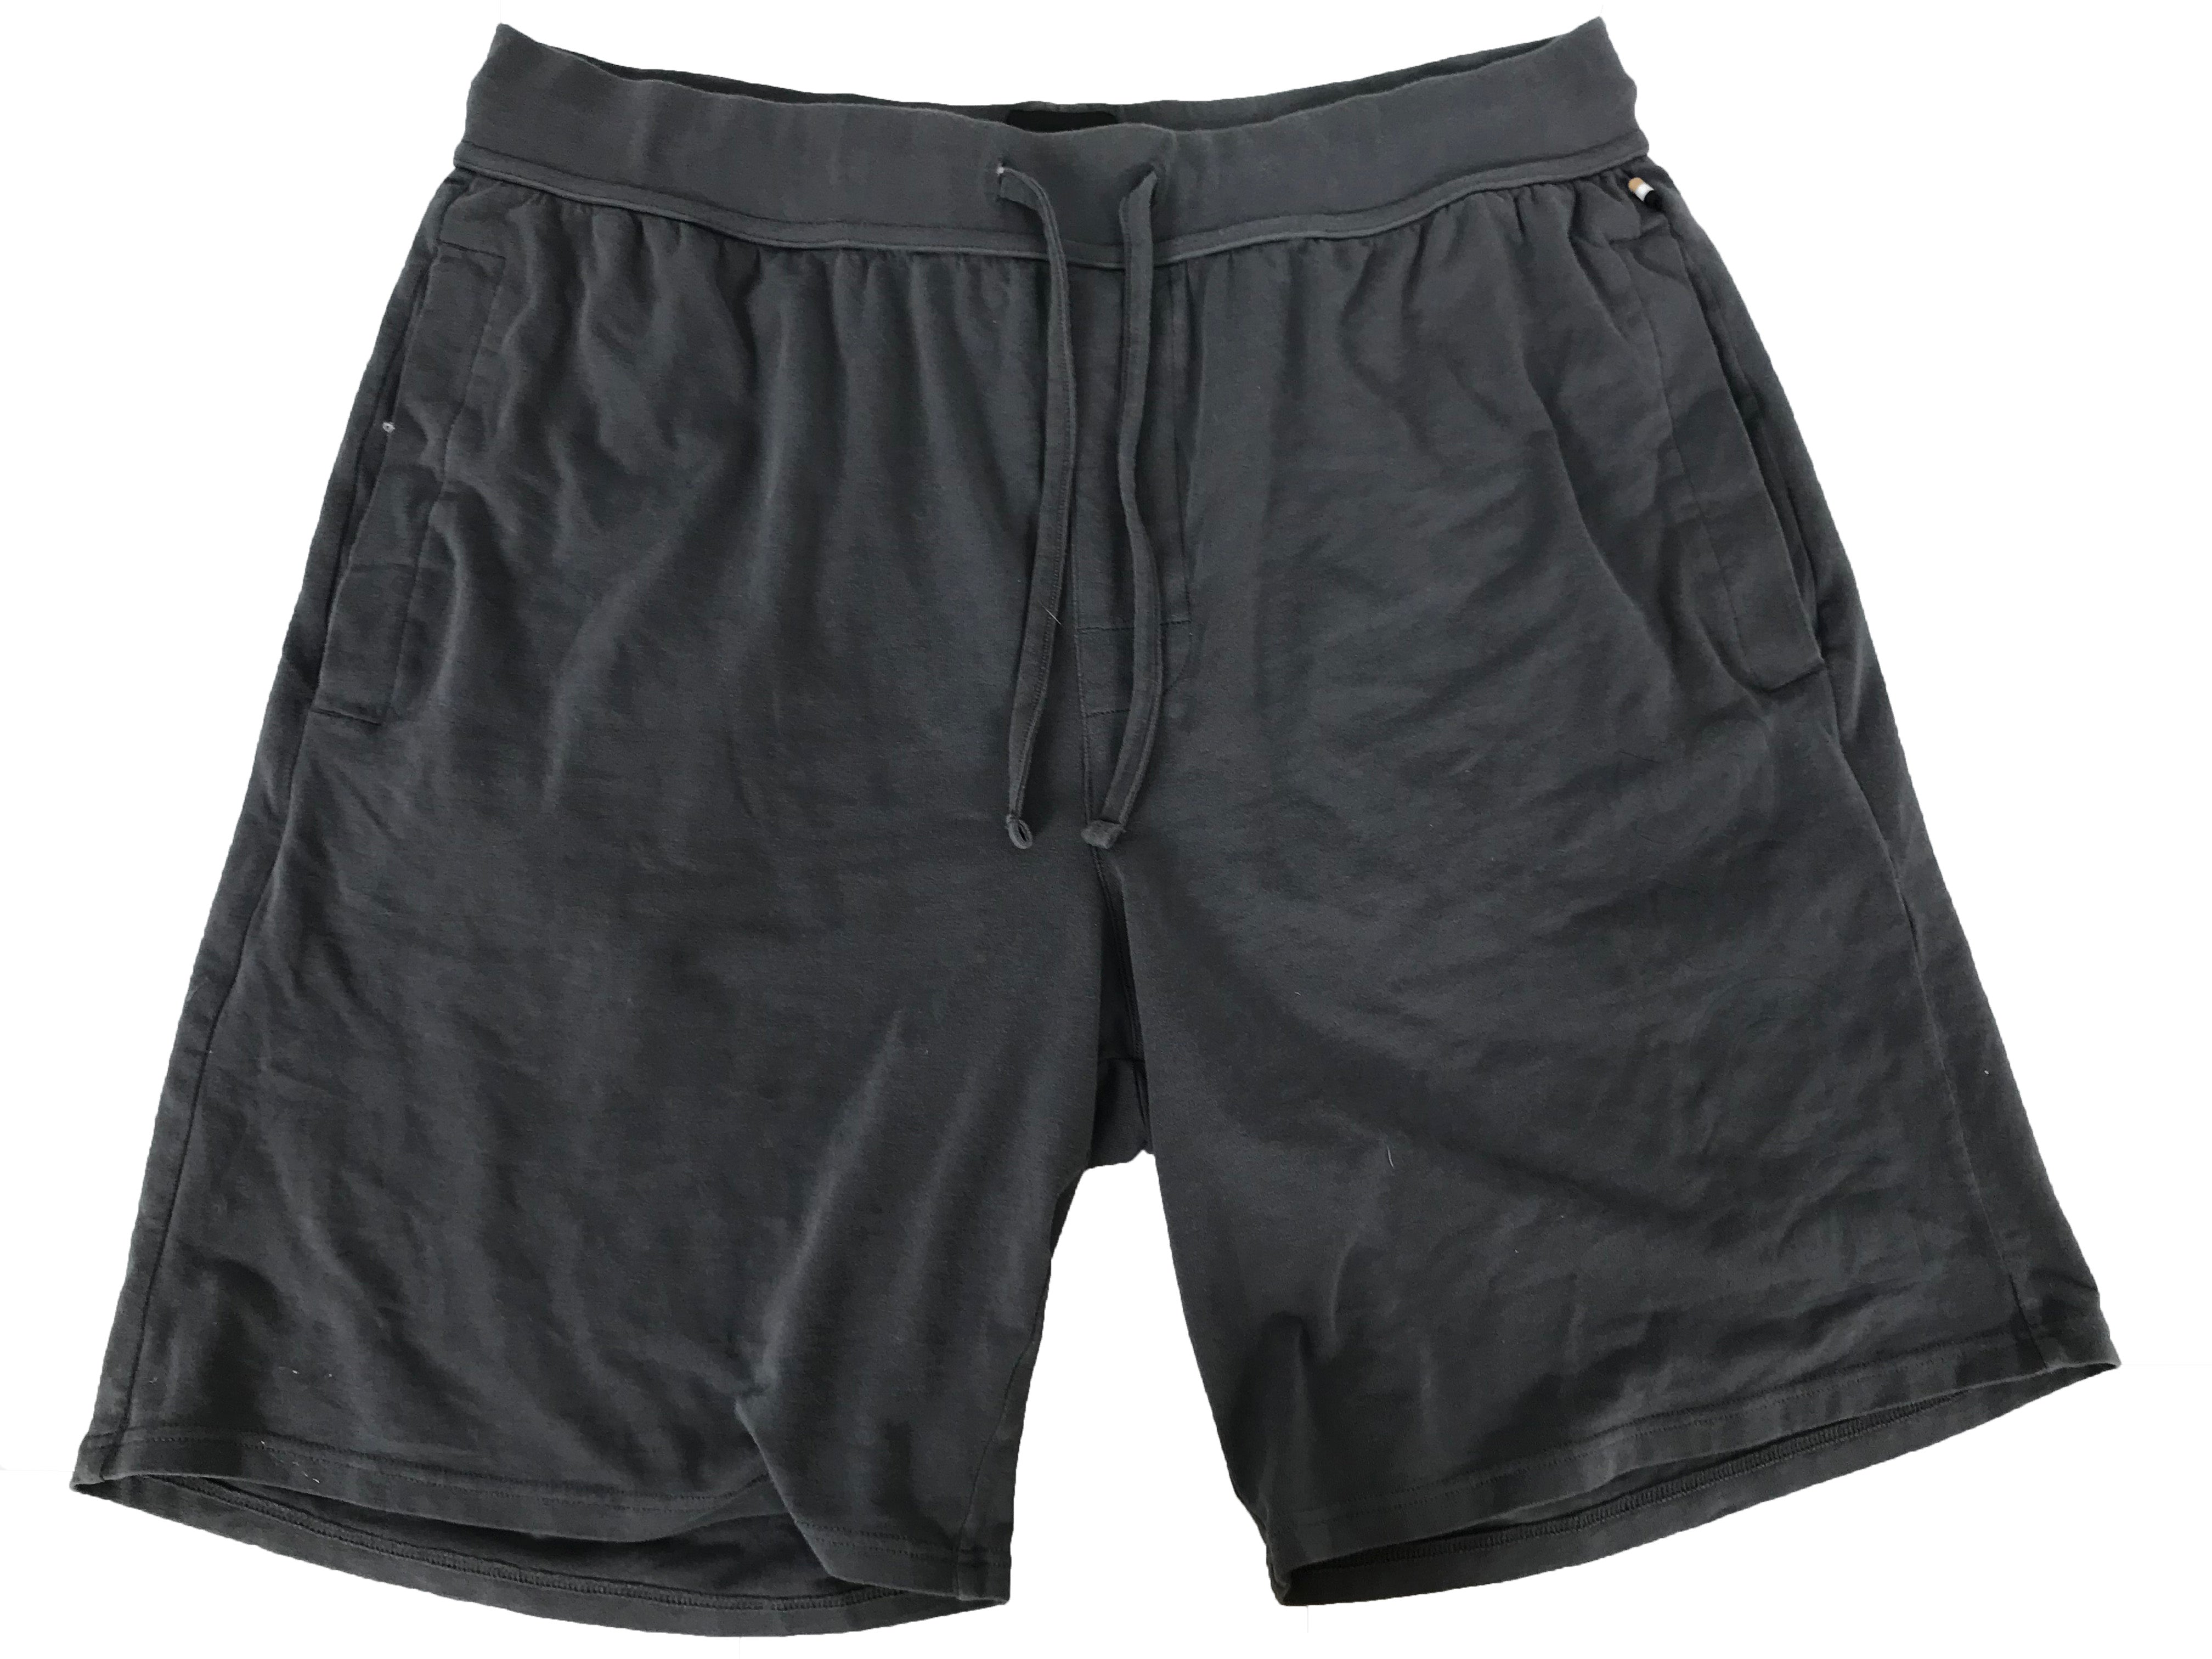 Hugo Boss Gray Shorts Men's Size Medium